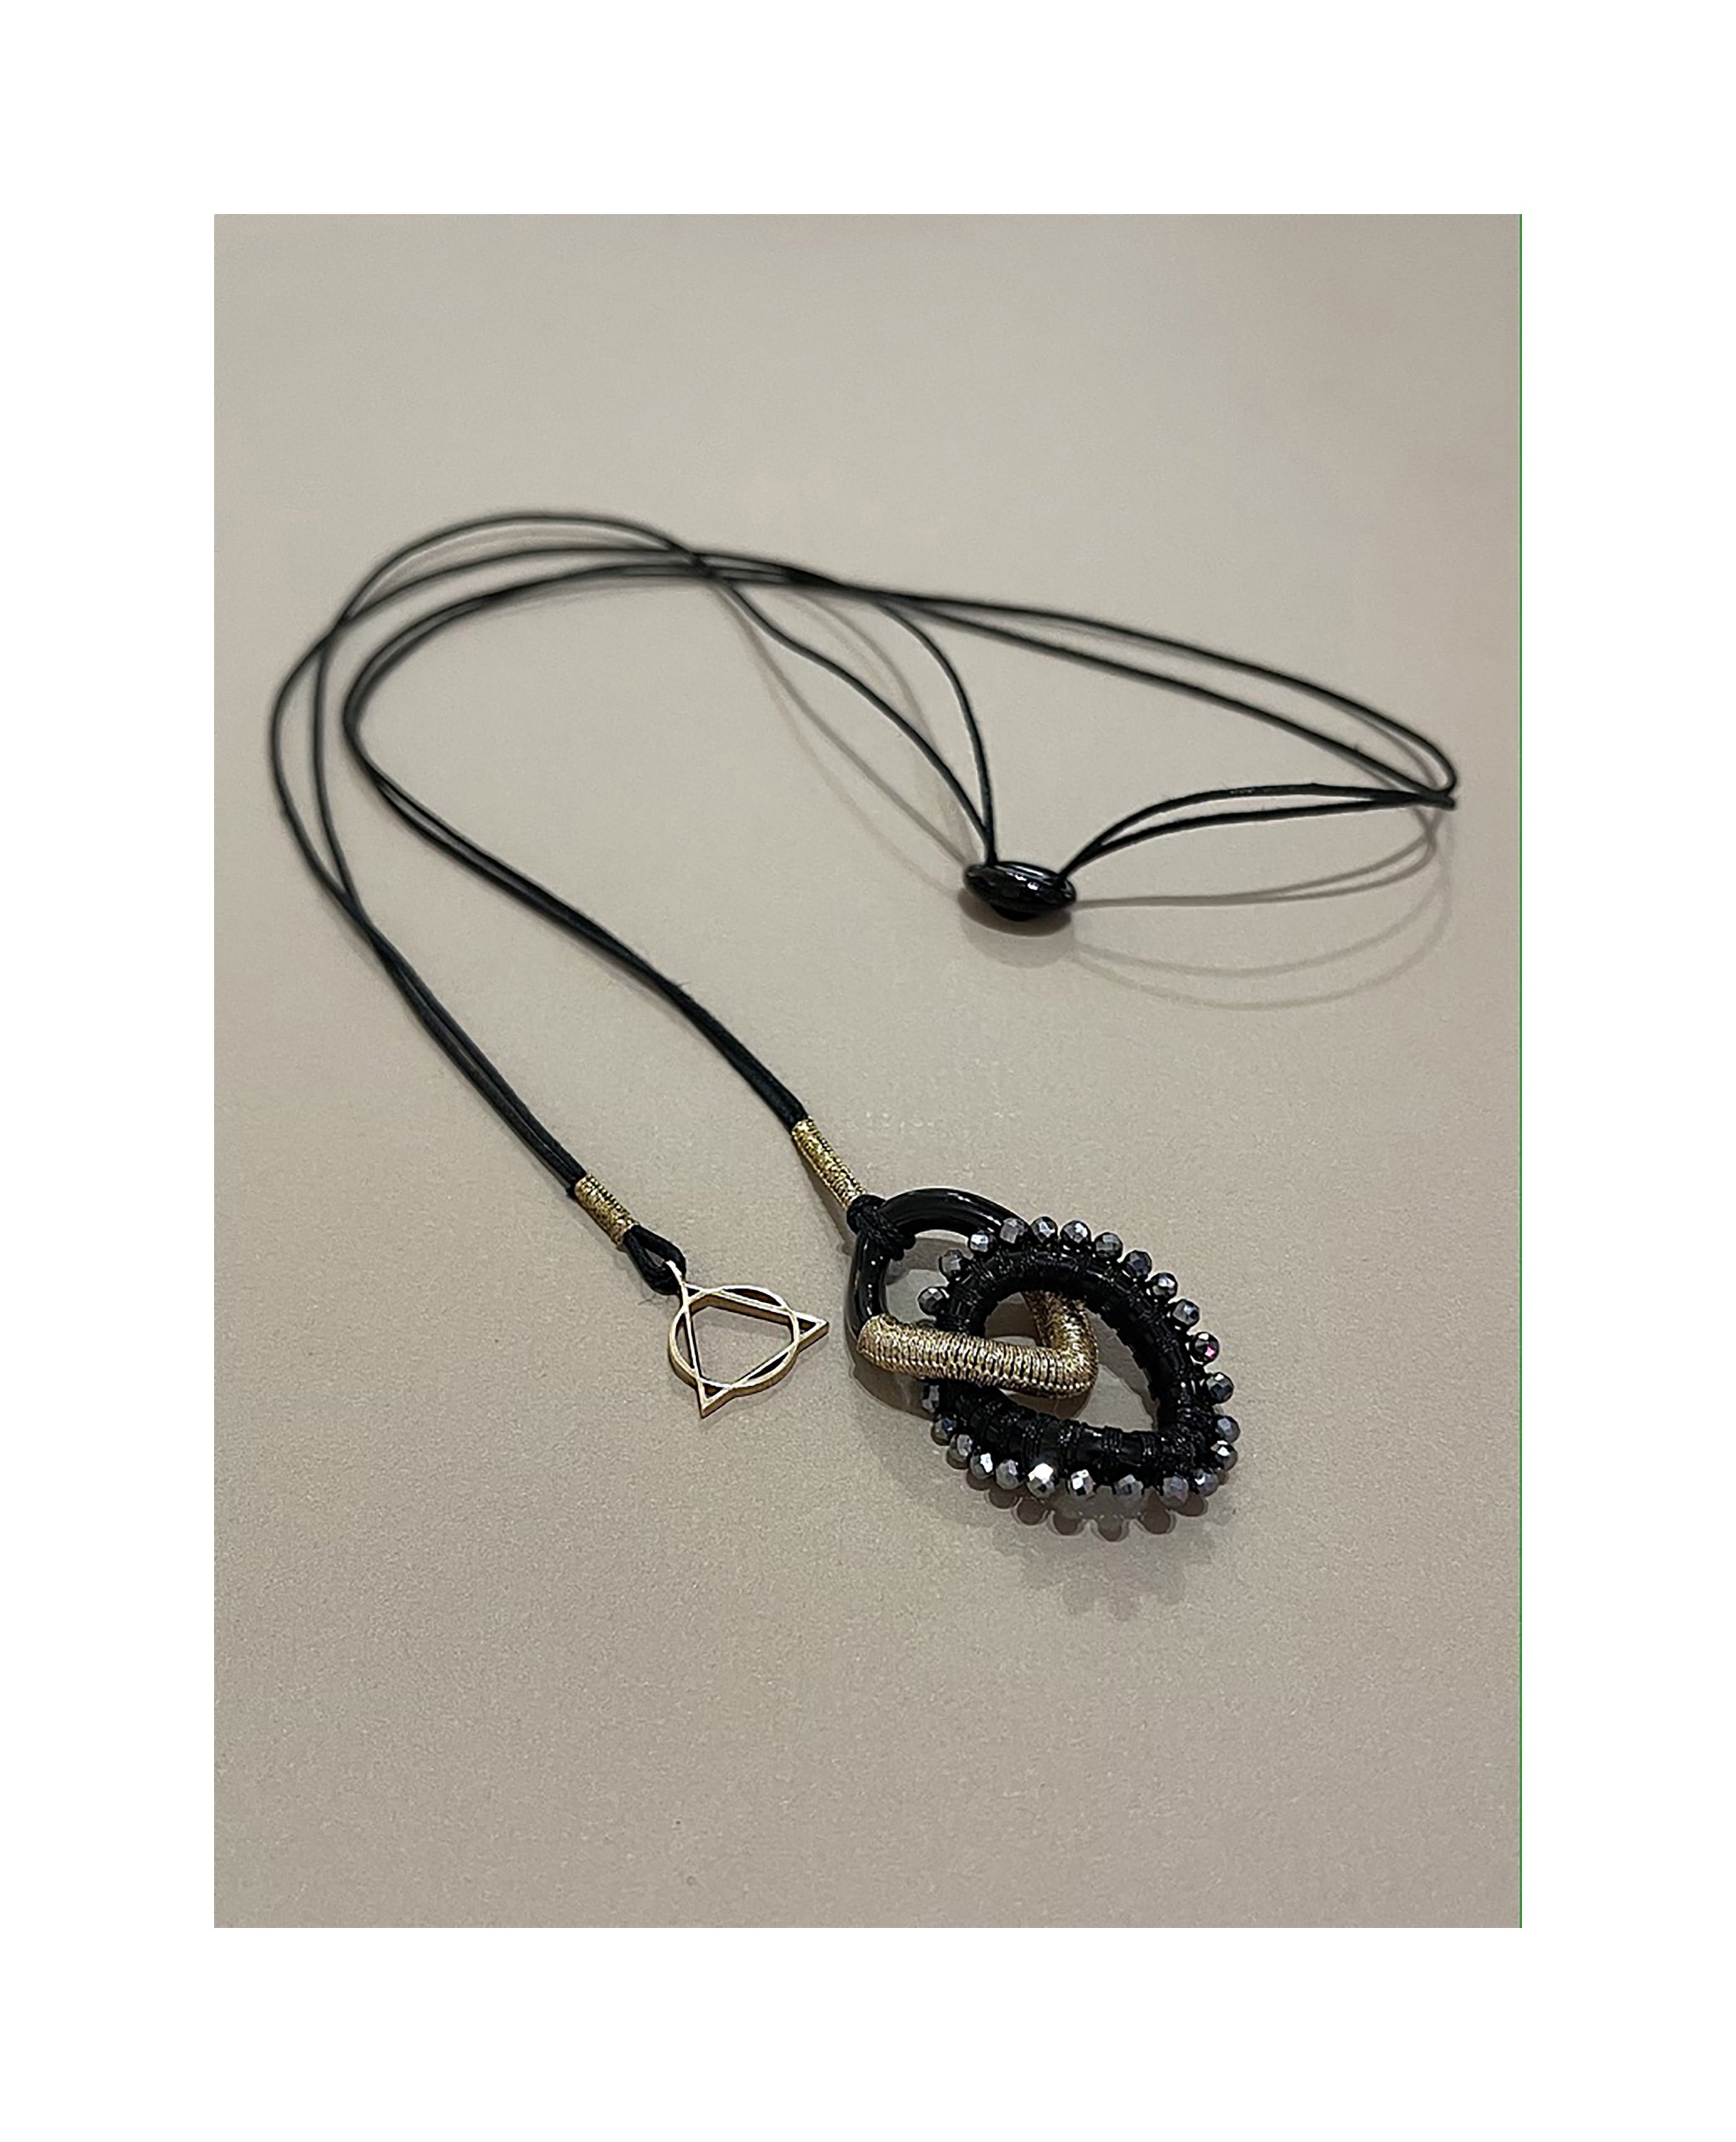 Star of David necklace for men bronze pendant black cord Jewish gift for  him | eBay